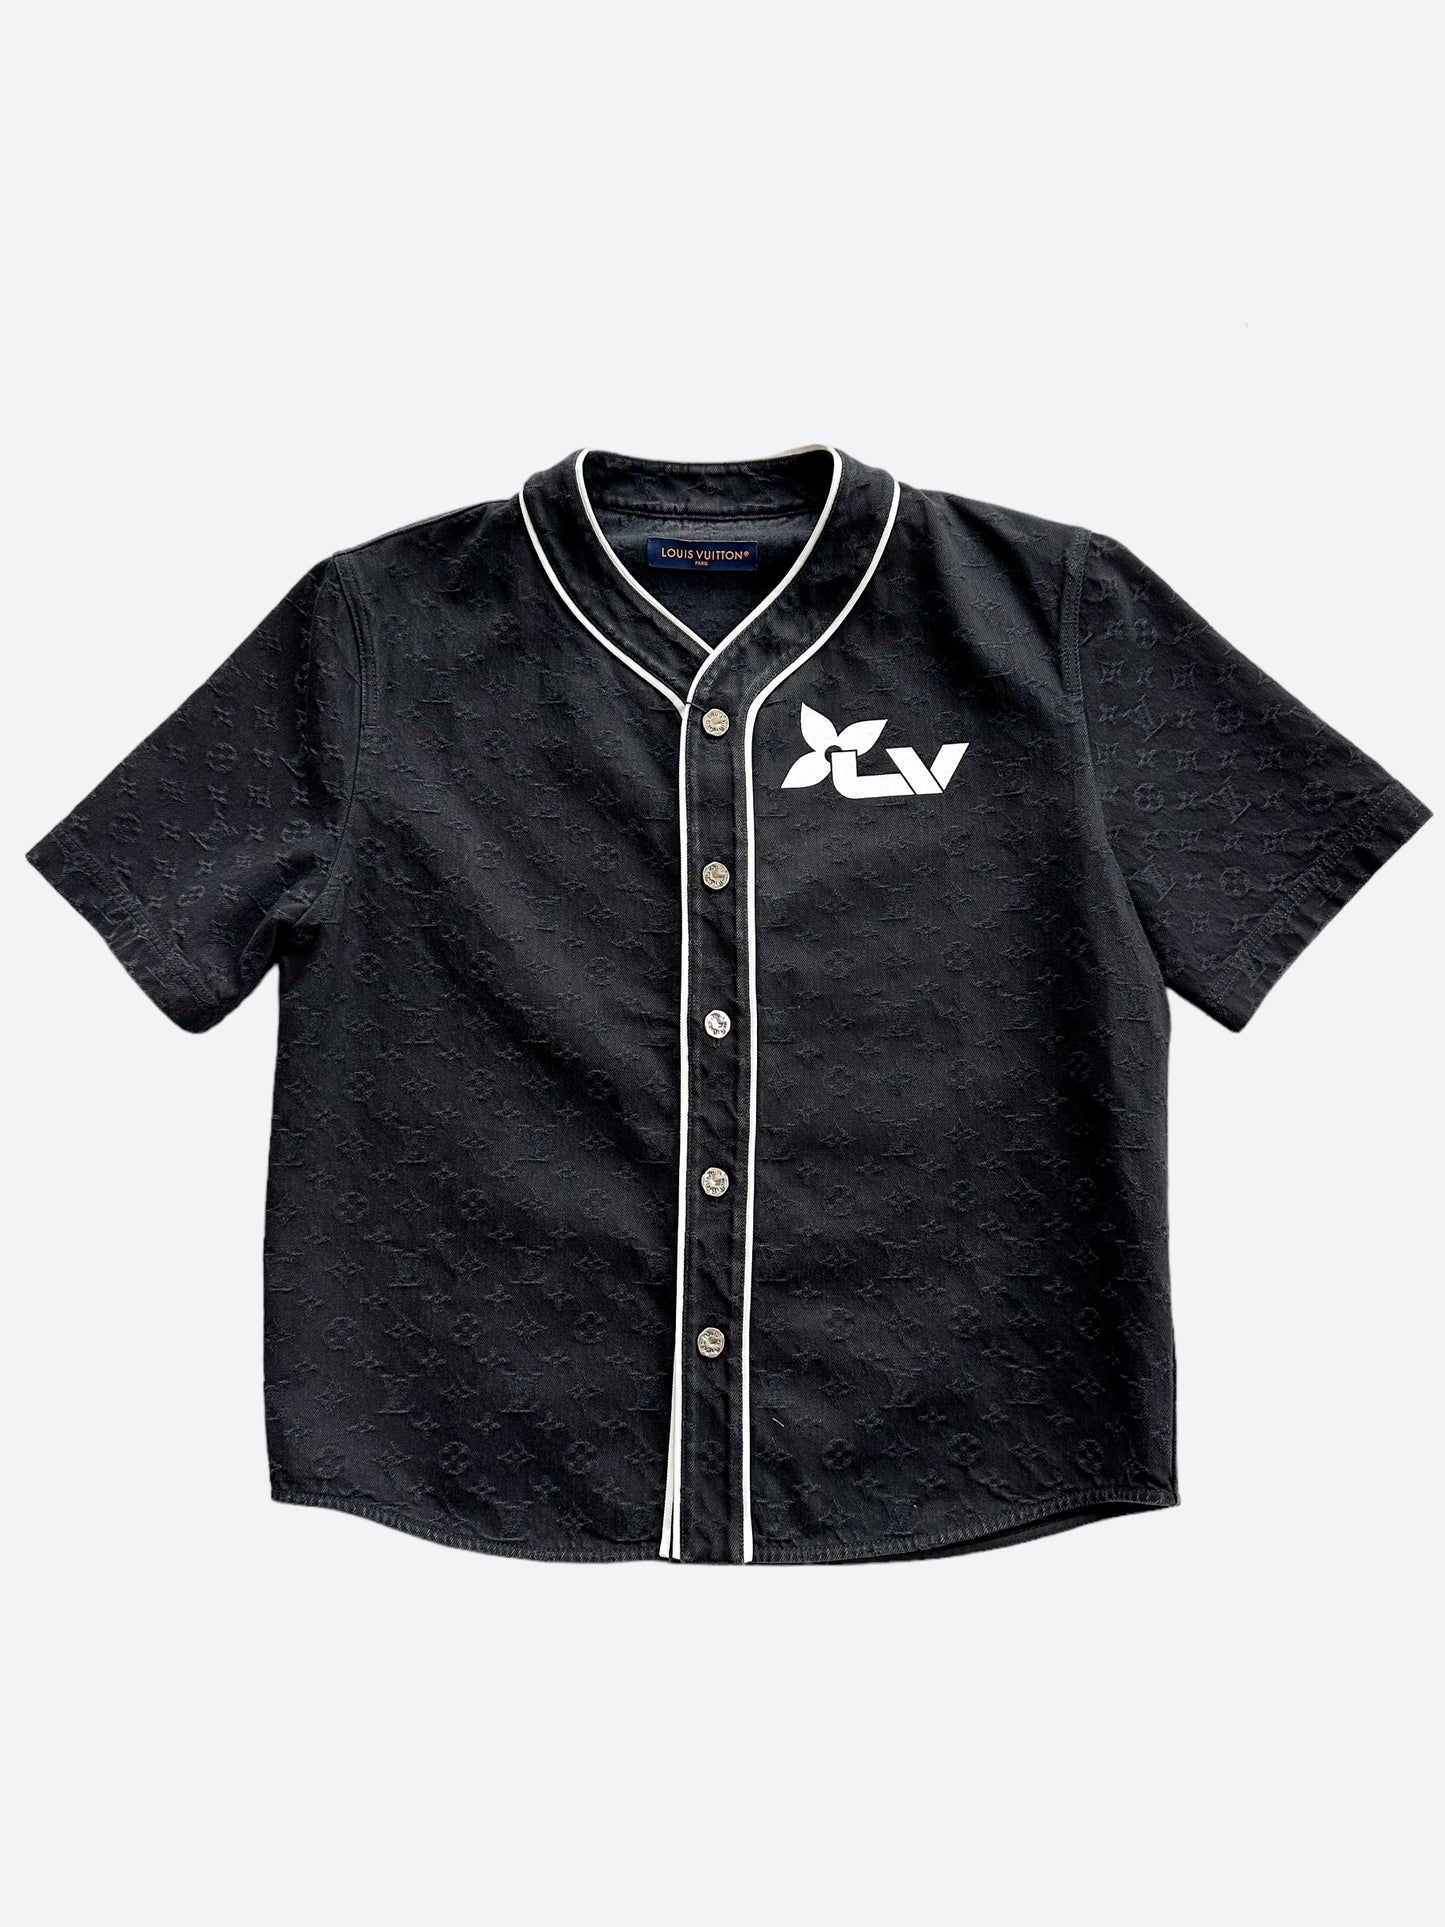 Louis Vuitton x Supreme Light Wash Monogram Denim Baseball Shirt S